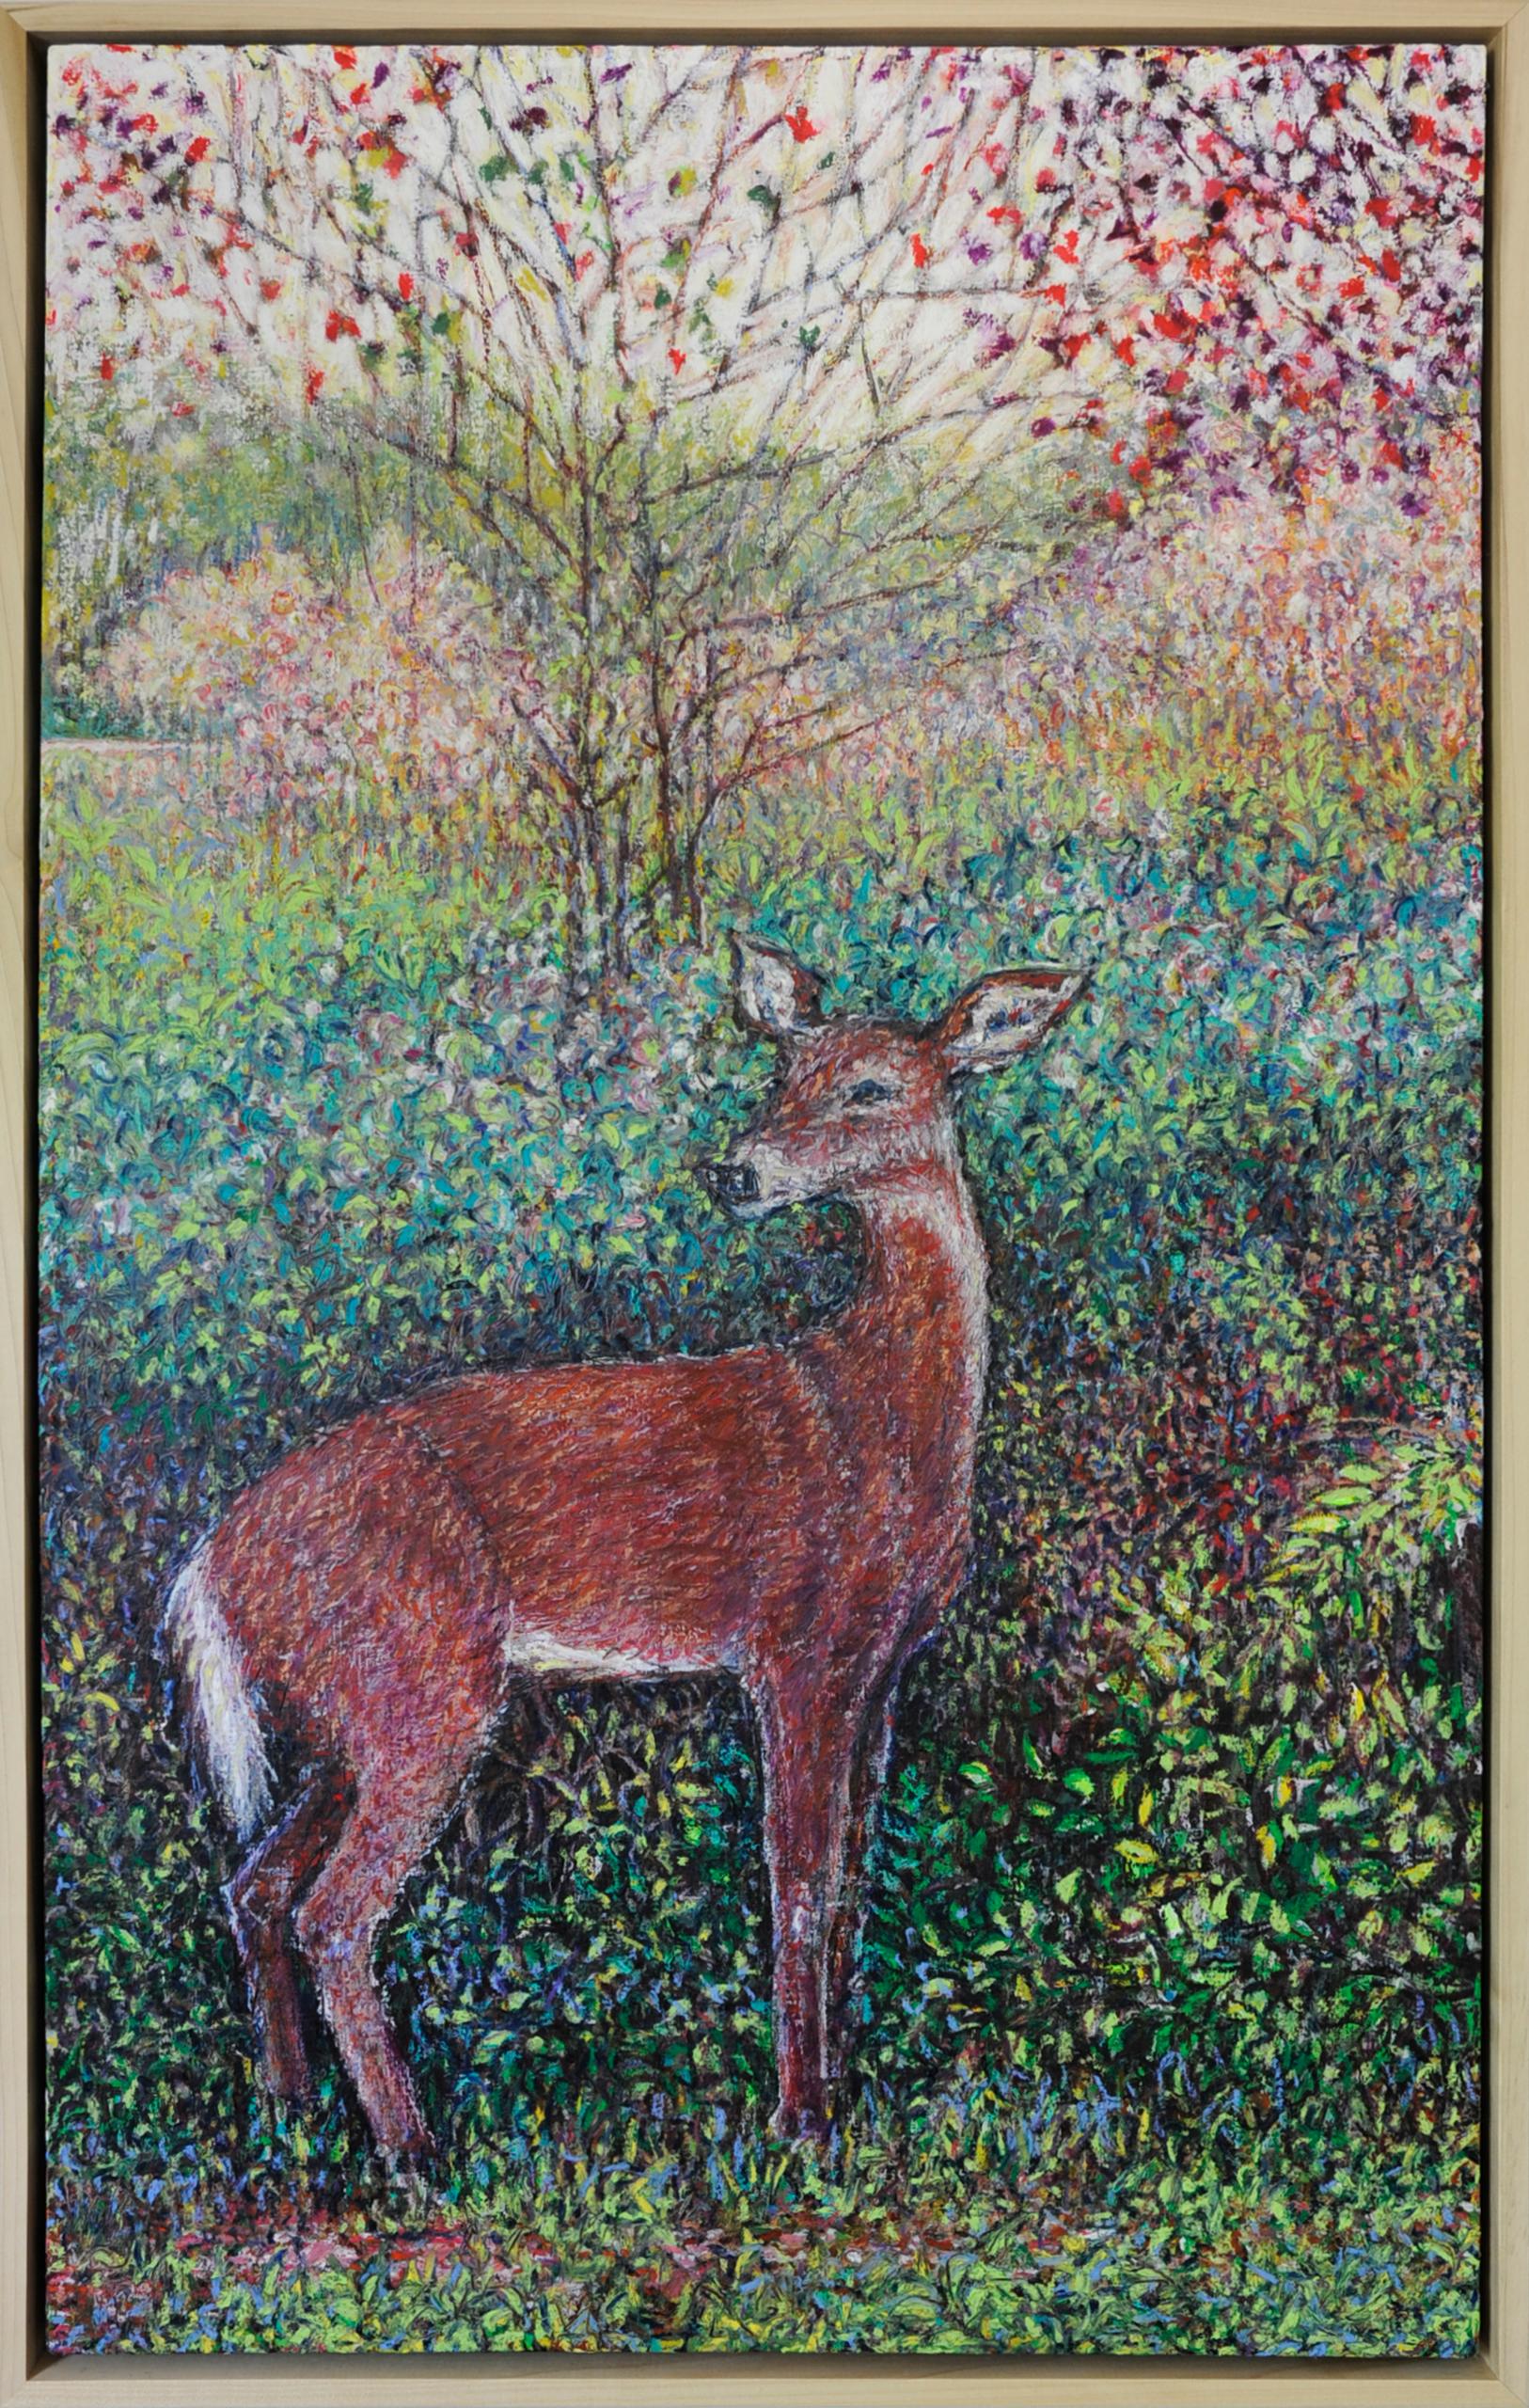 "Walk" - oil pastel drawing, figurative, nature, deer, optical mixing, colorful